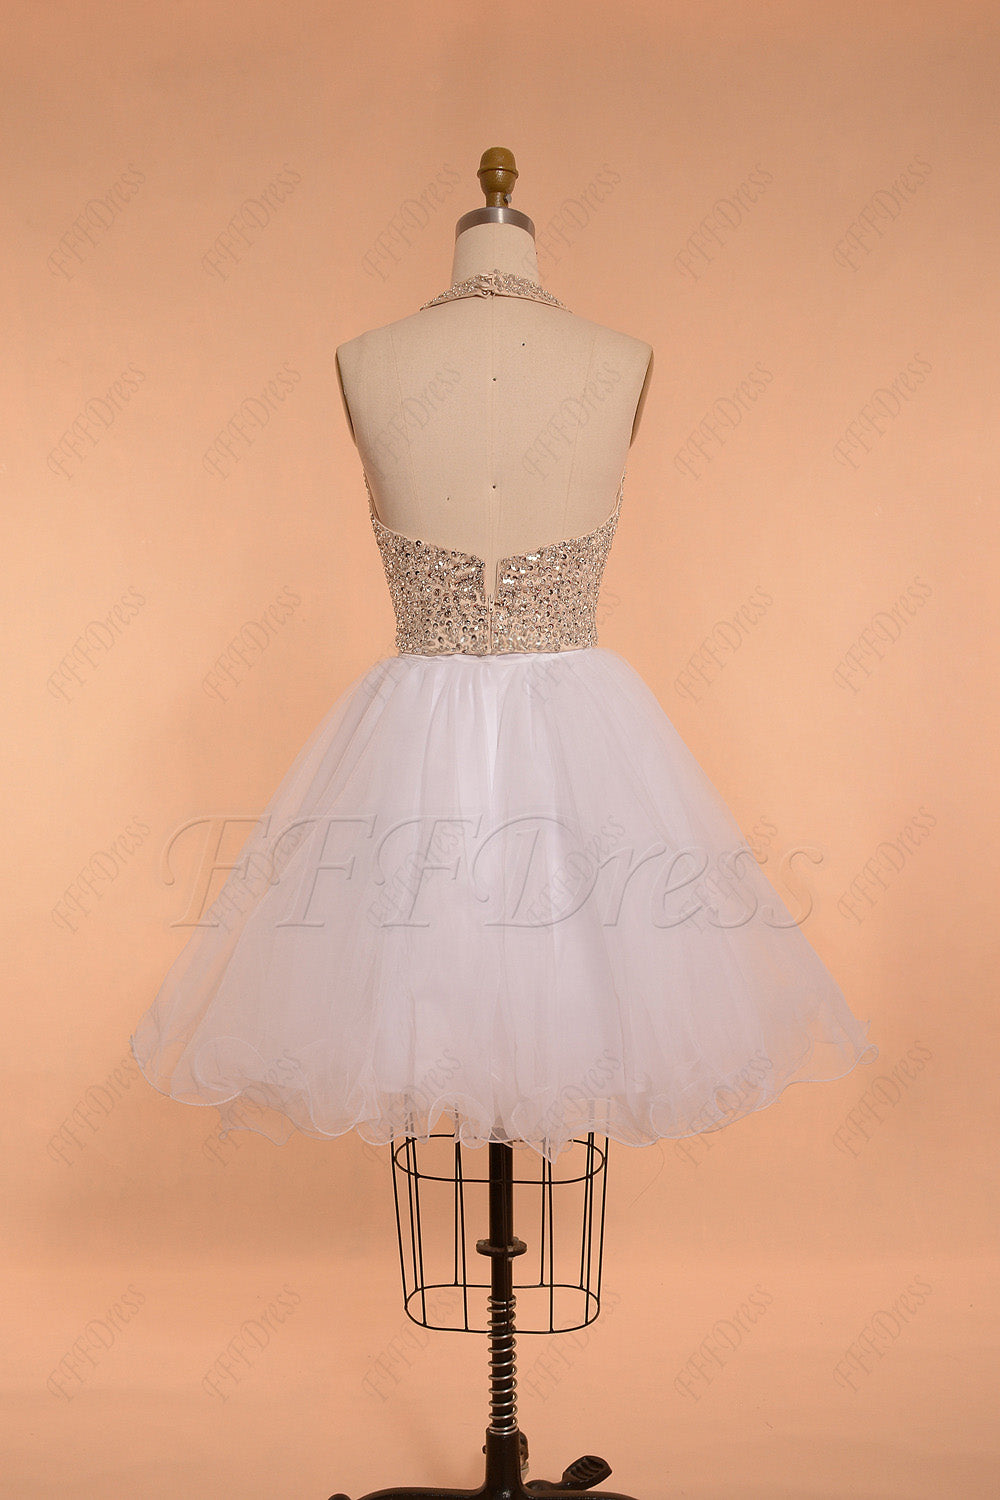 Halter backless beaded crystal white short prom dress homecoming dresses